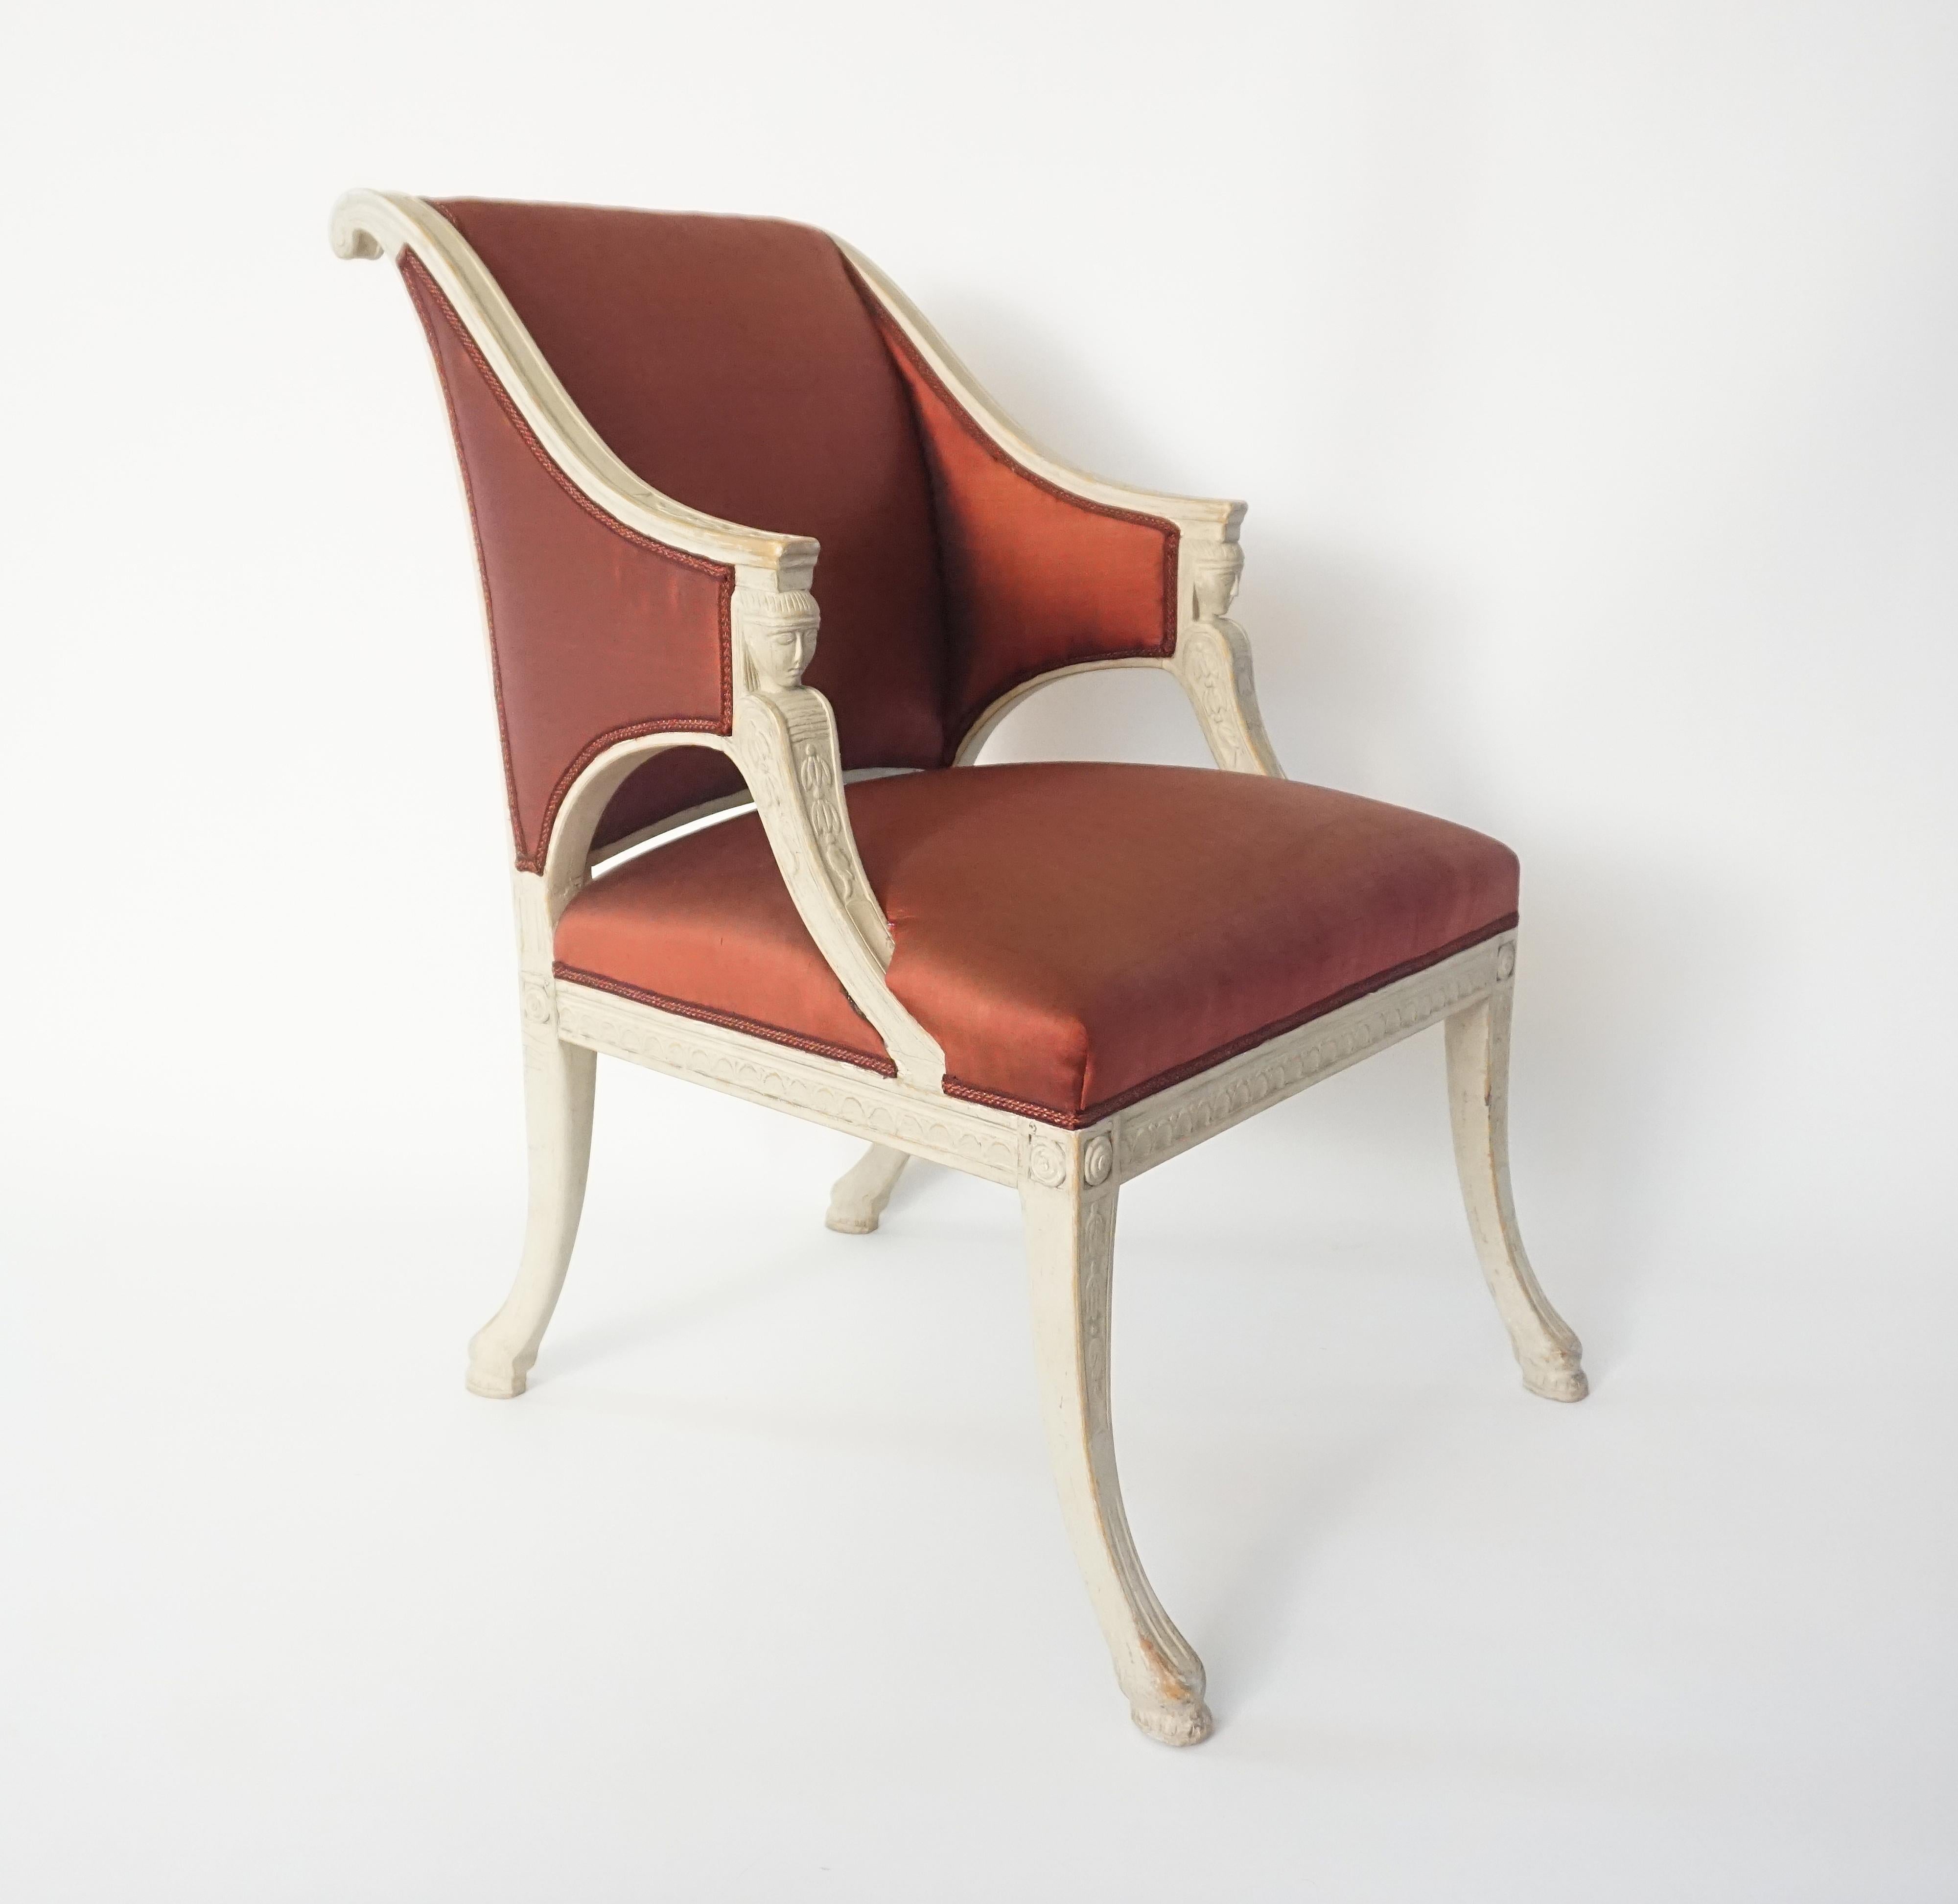 Early 19th Century Gustavian Chairs by Swedish Royal Court Chair-Maker Ephraim Ståhl, circa 1800